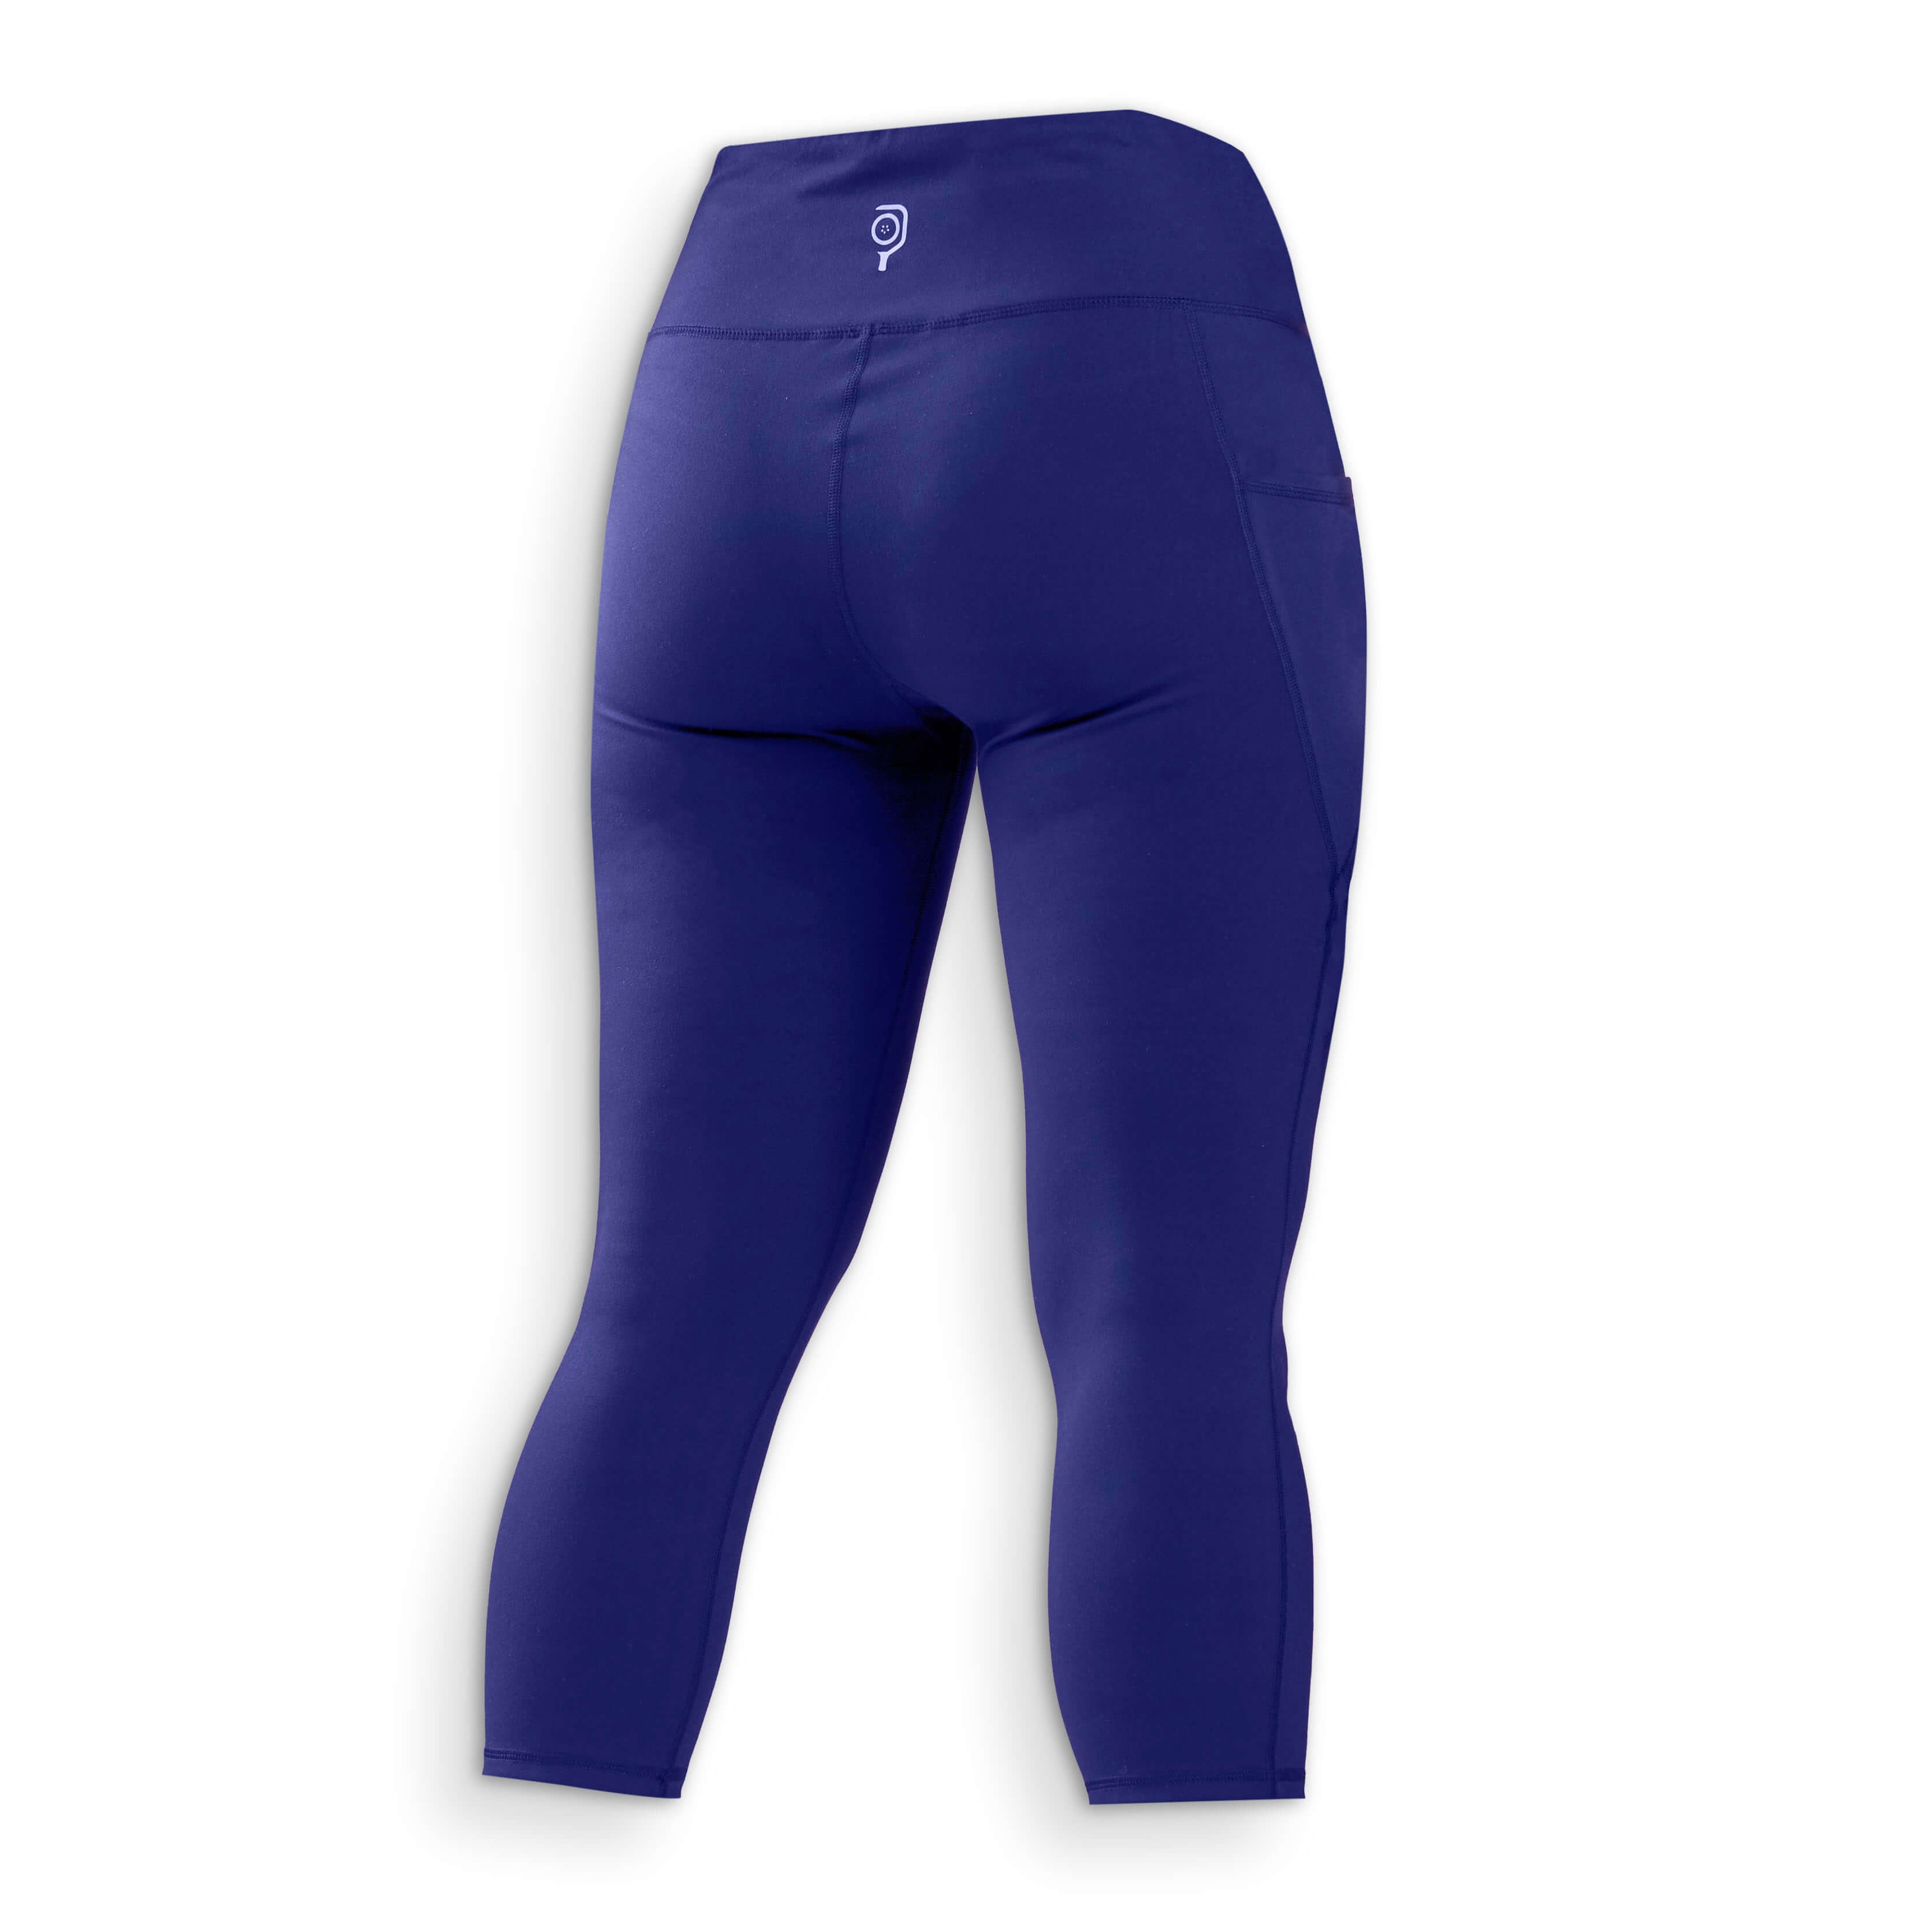 Spalding Women's Essential Capri Legging, Ultra Navy, XL price in